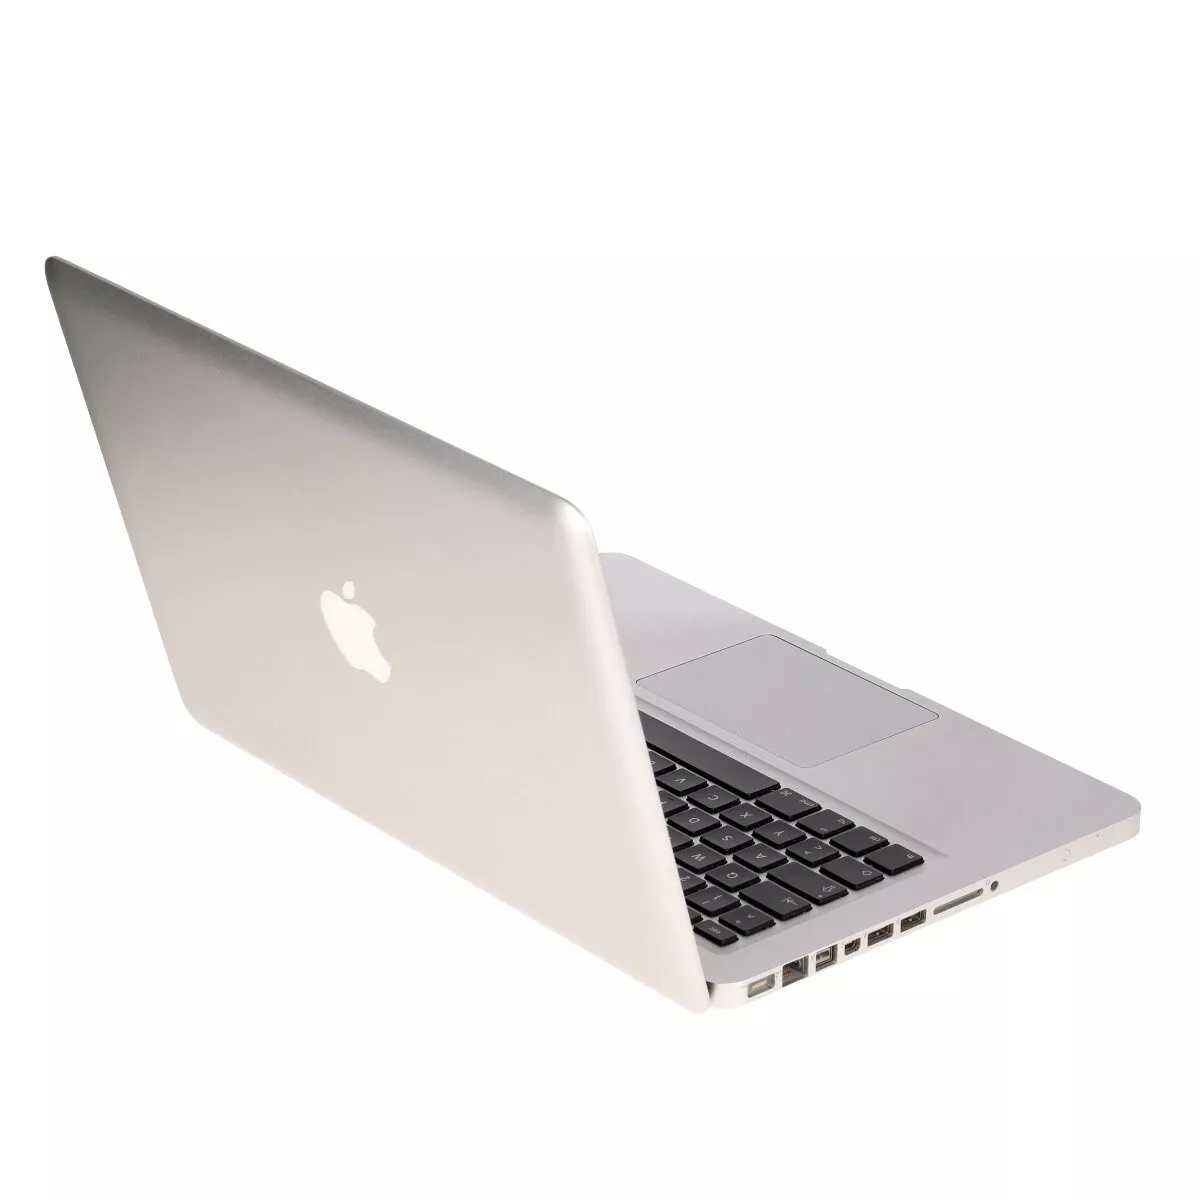 Apple MacBook Pro A1278 Core i5 3210M 2,5 GHz 4 GB 500 GB Webcam B-Ware